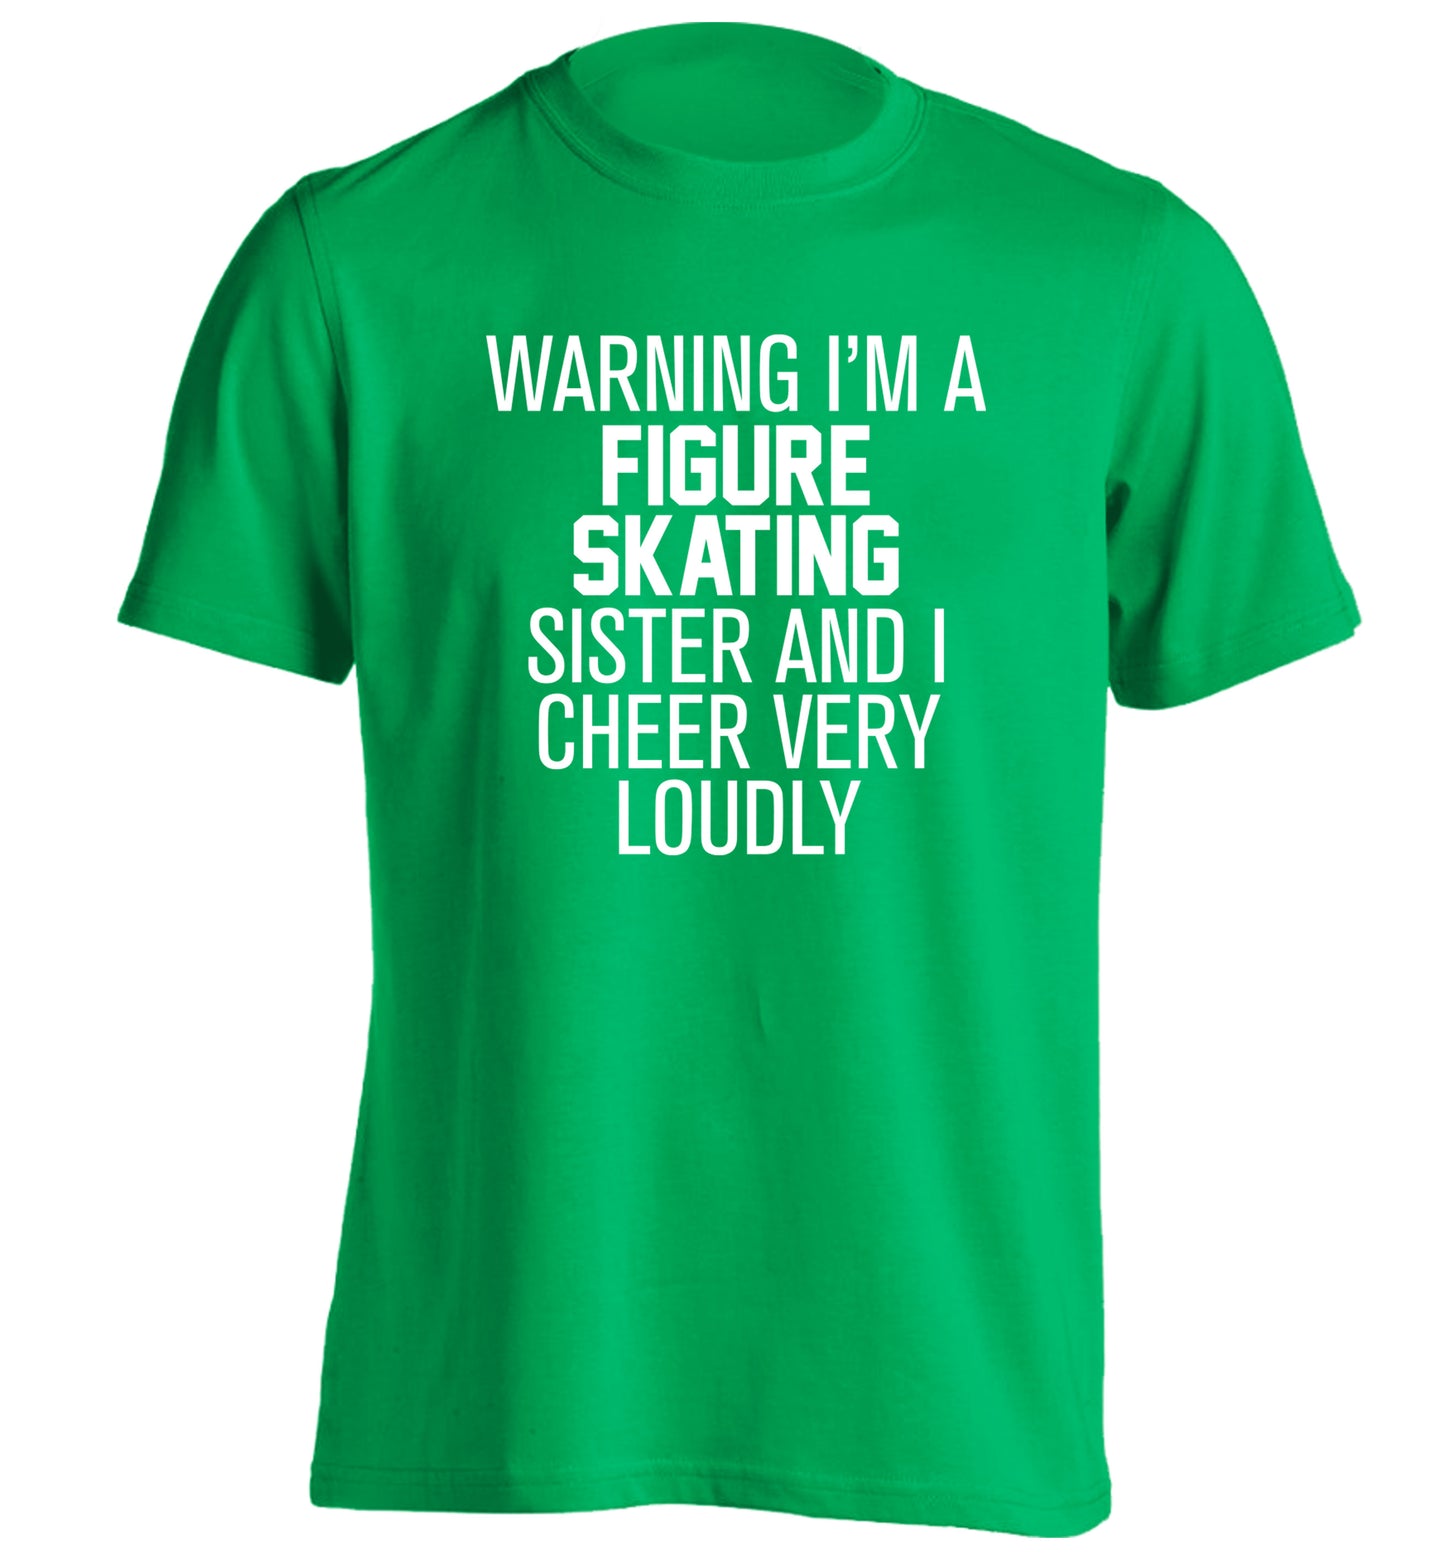 Warning I'm a figure skating sister and I cheer very loudly adults unisexgreen Tshirt 2XL